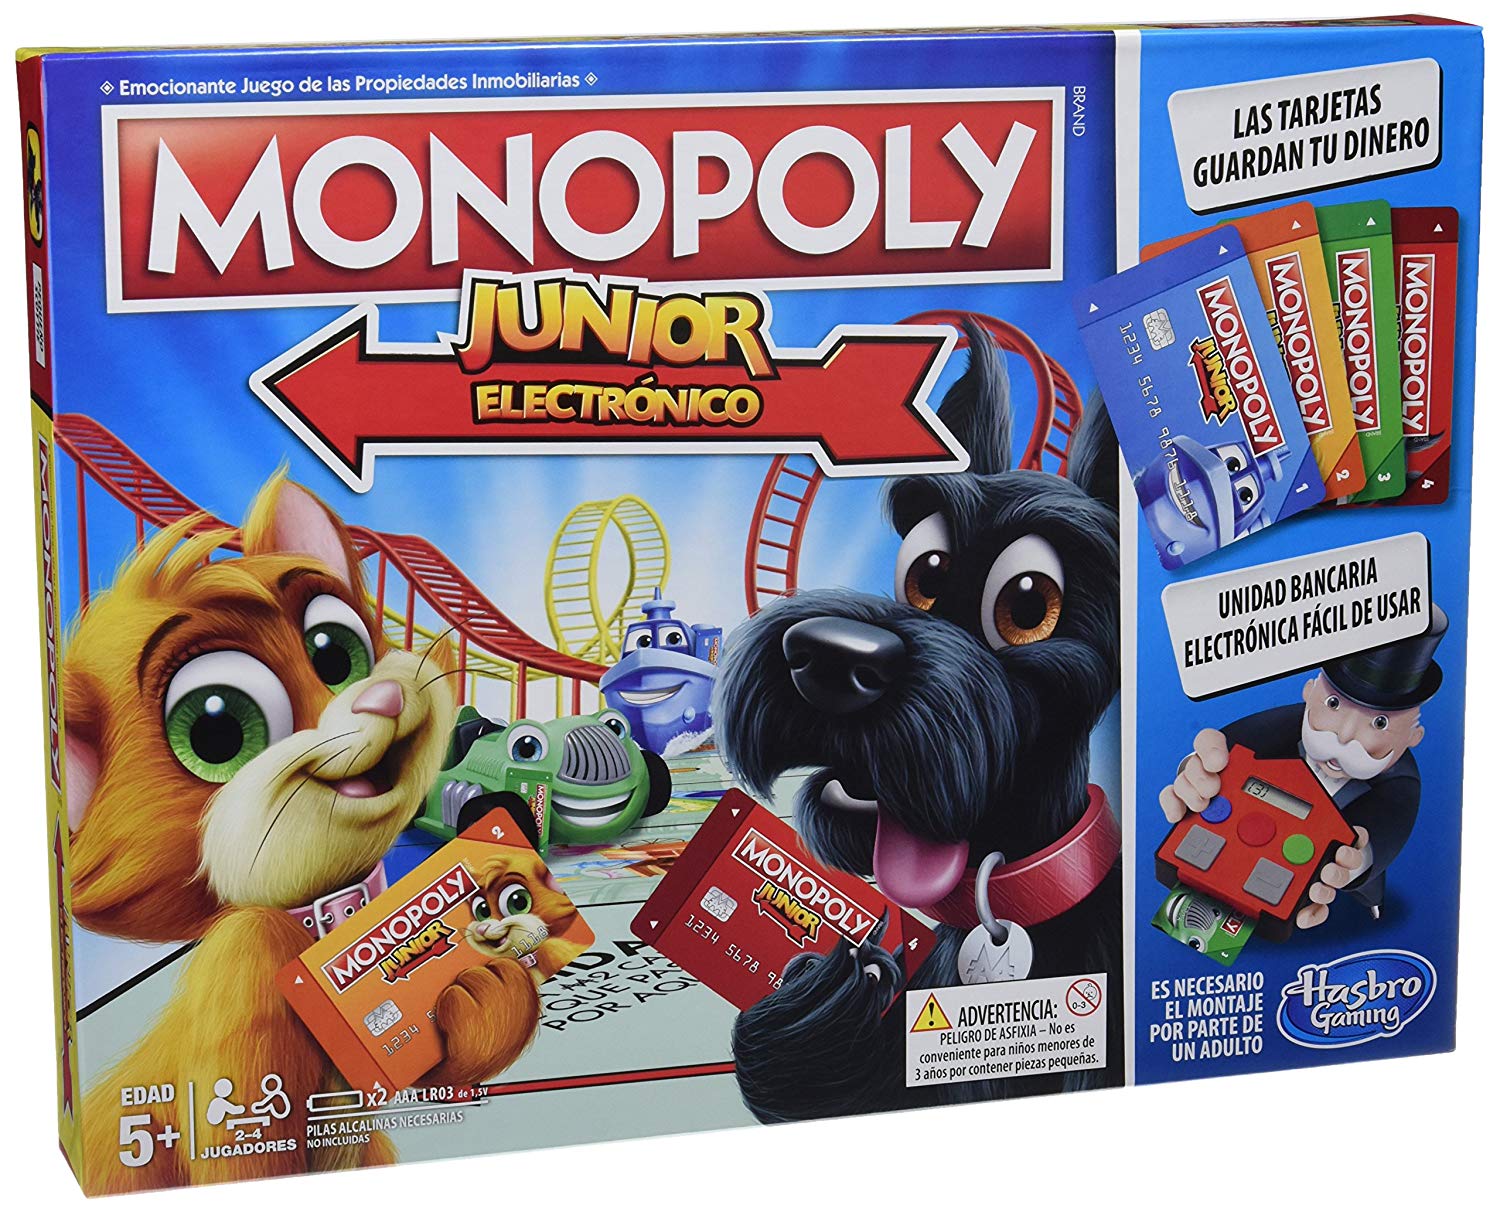 Monopoly Junior Electronico solo 13,8€